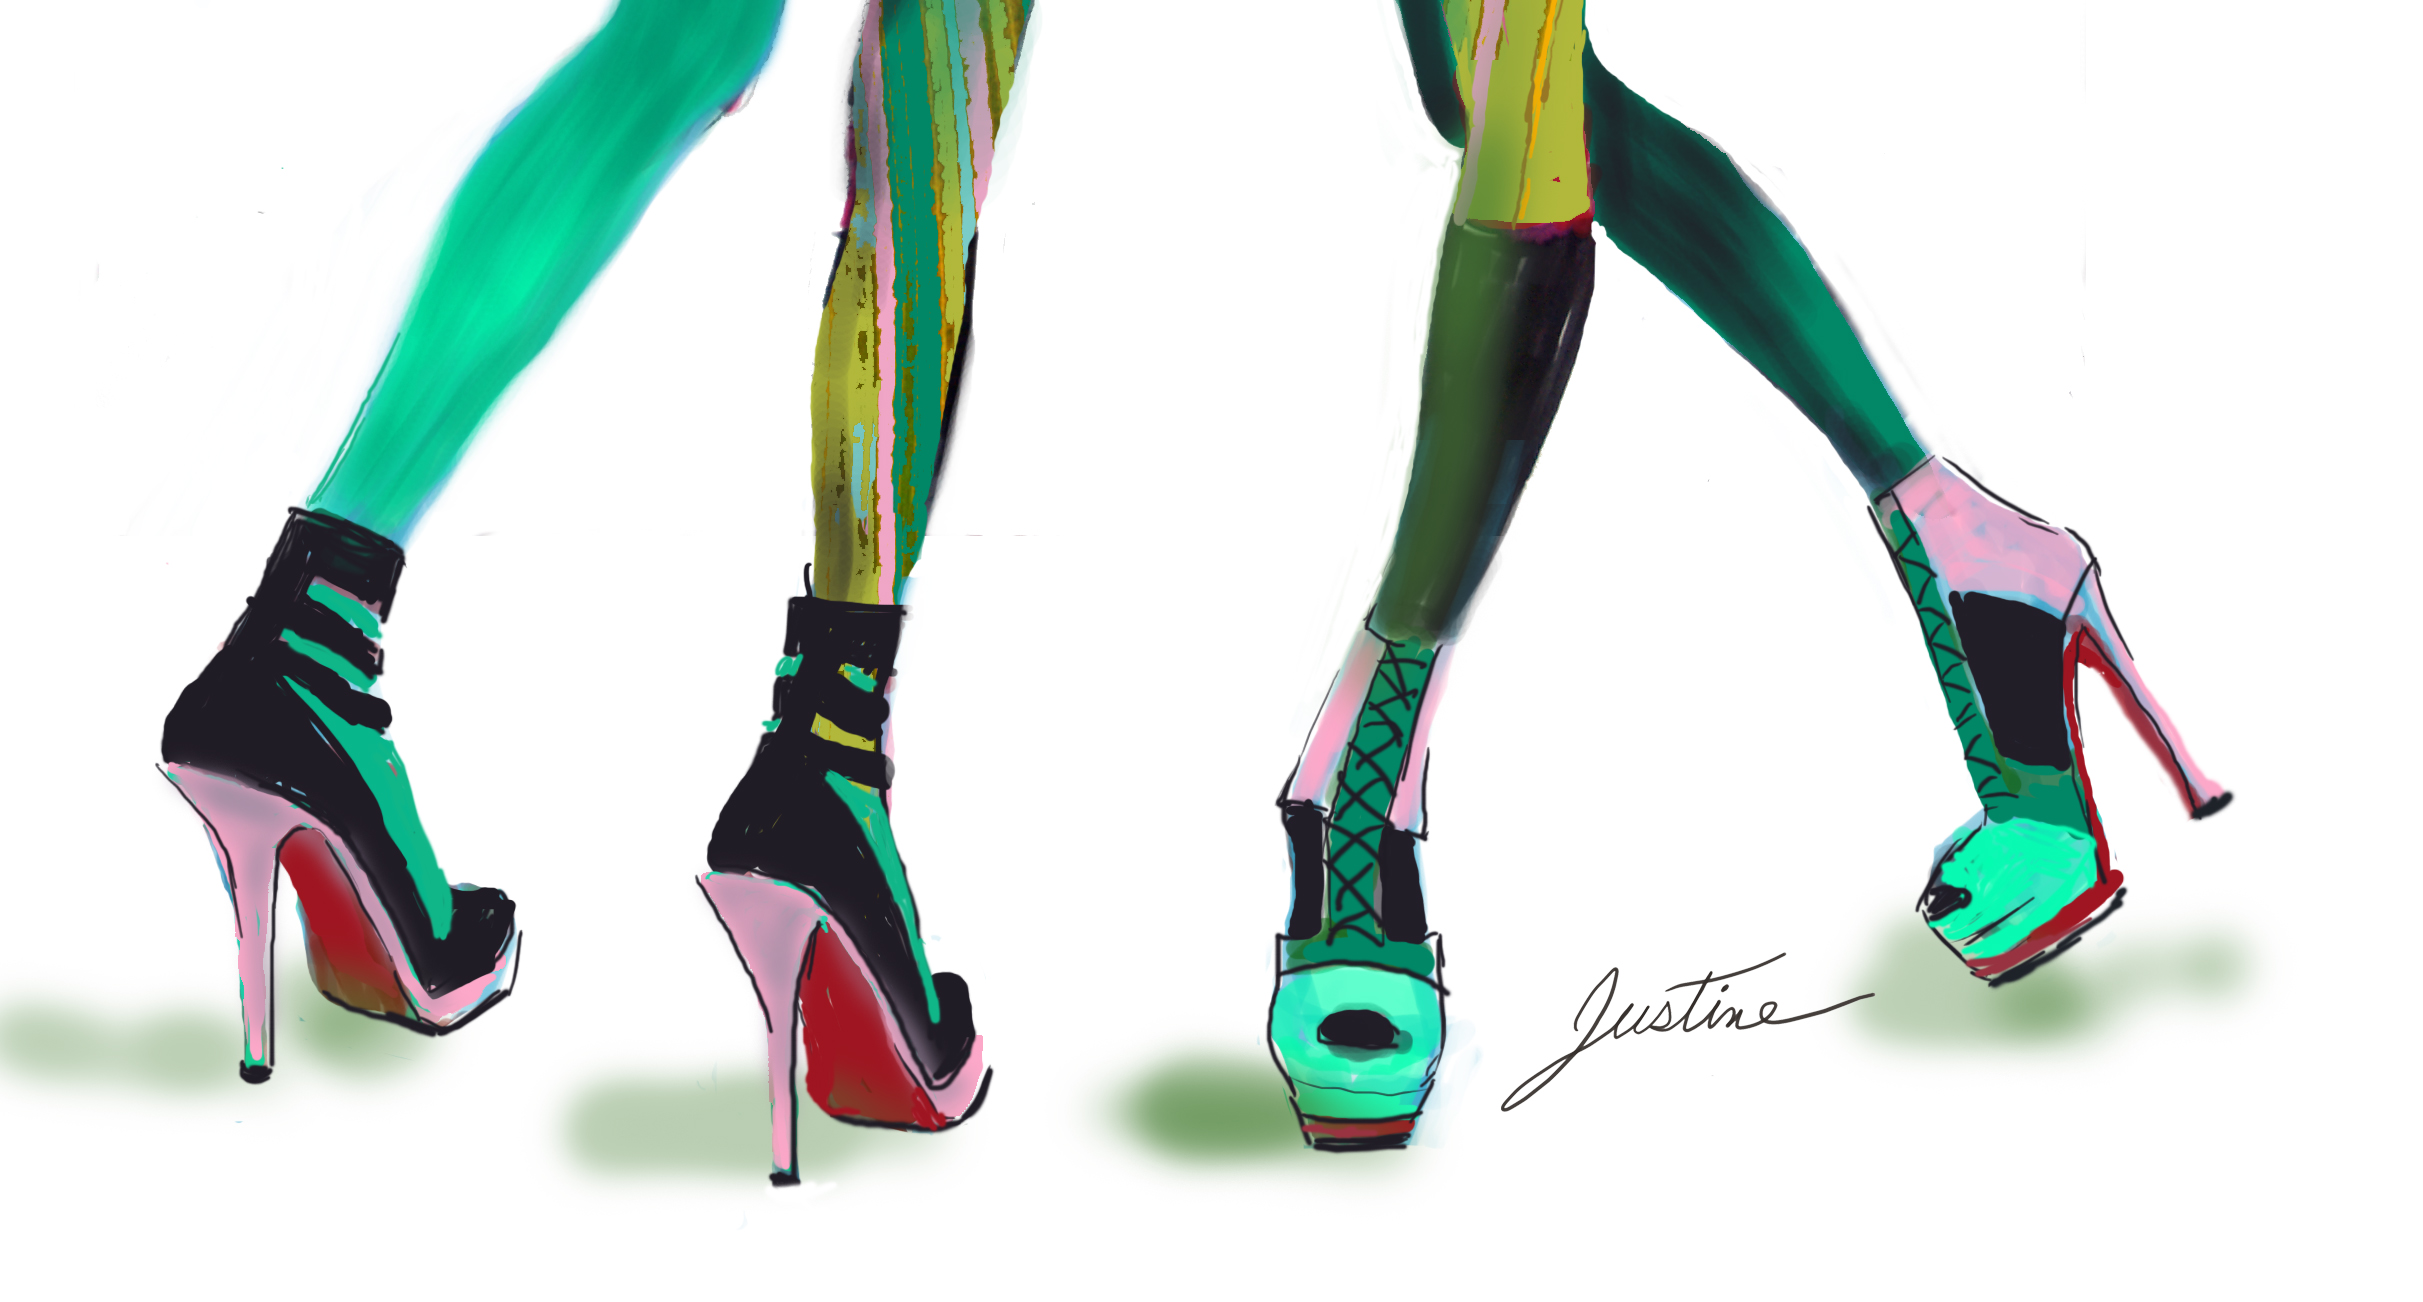 sketch fashion high heels drawing